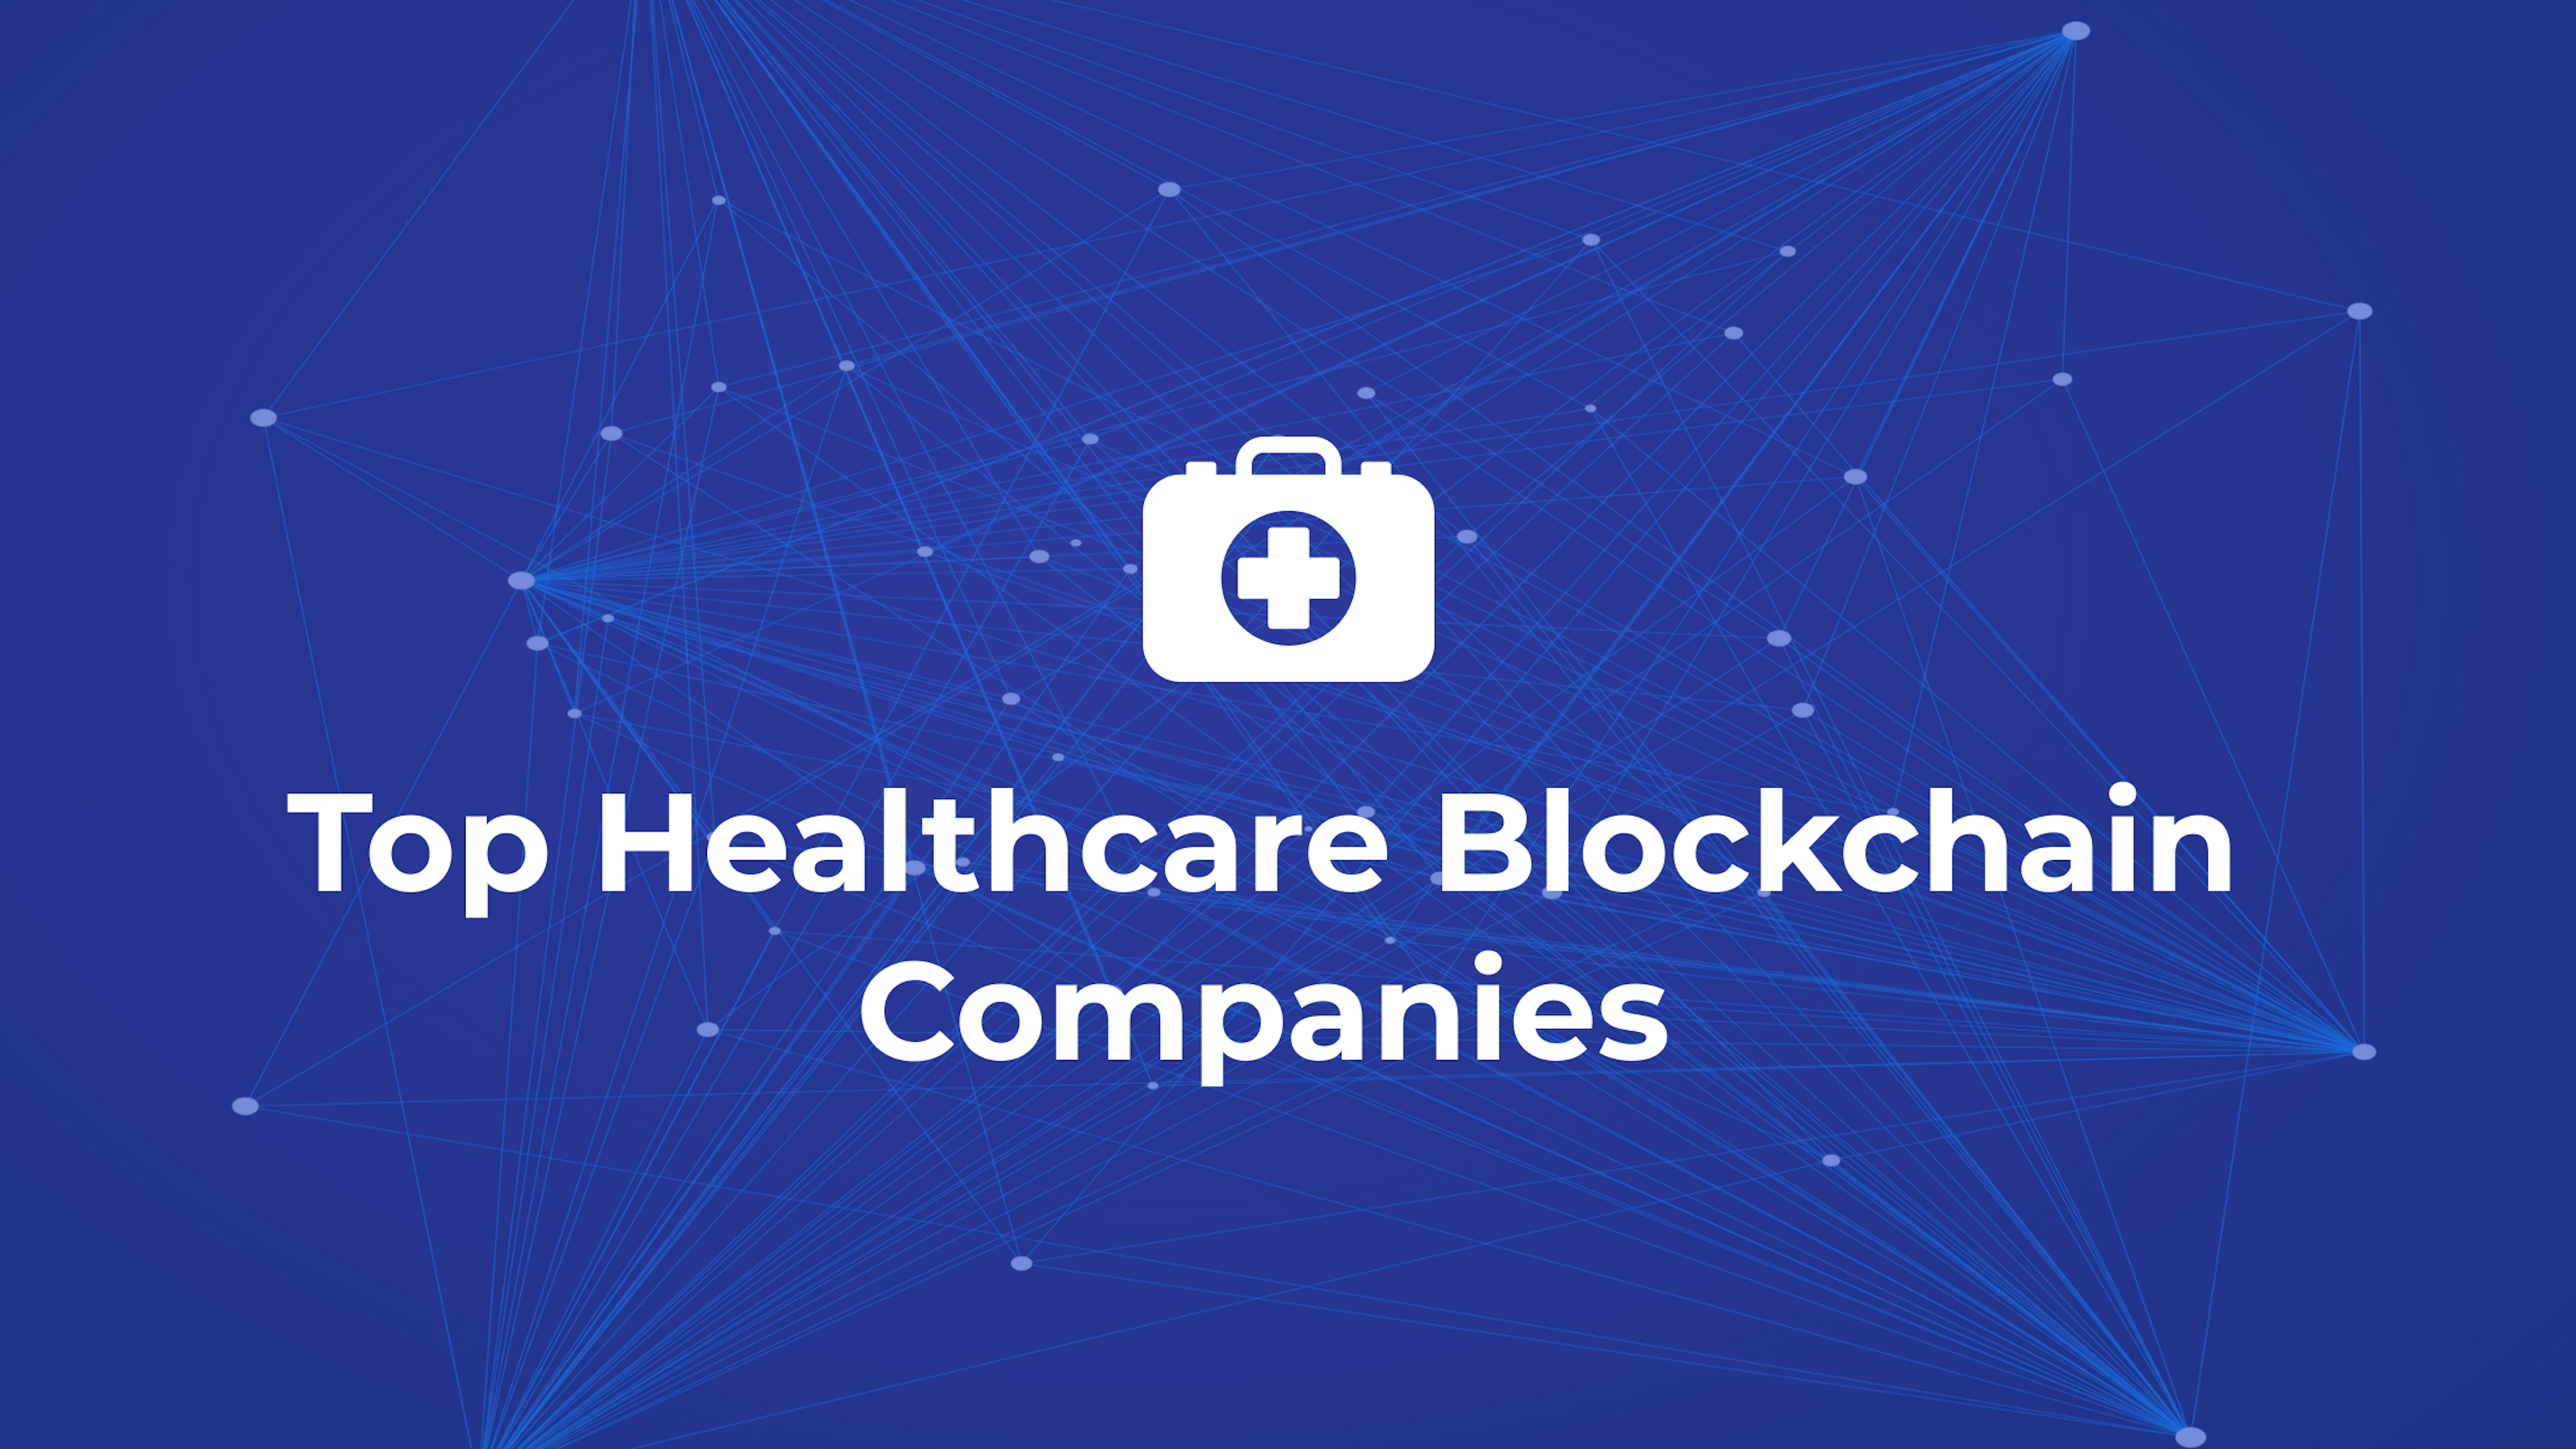 Top Healthcare Blockchain Companies in 2022